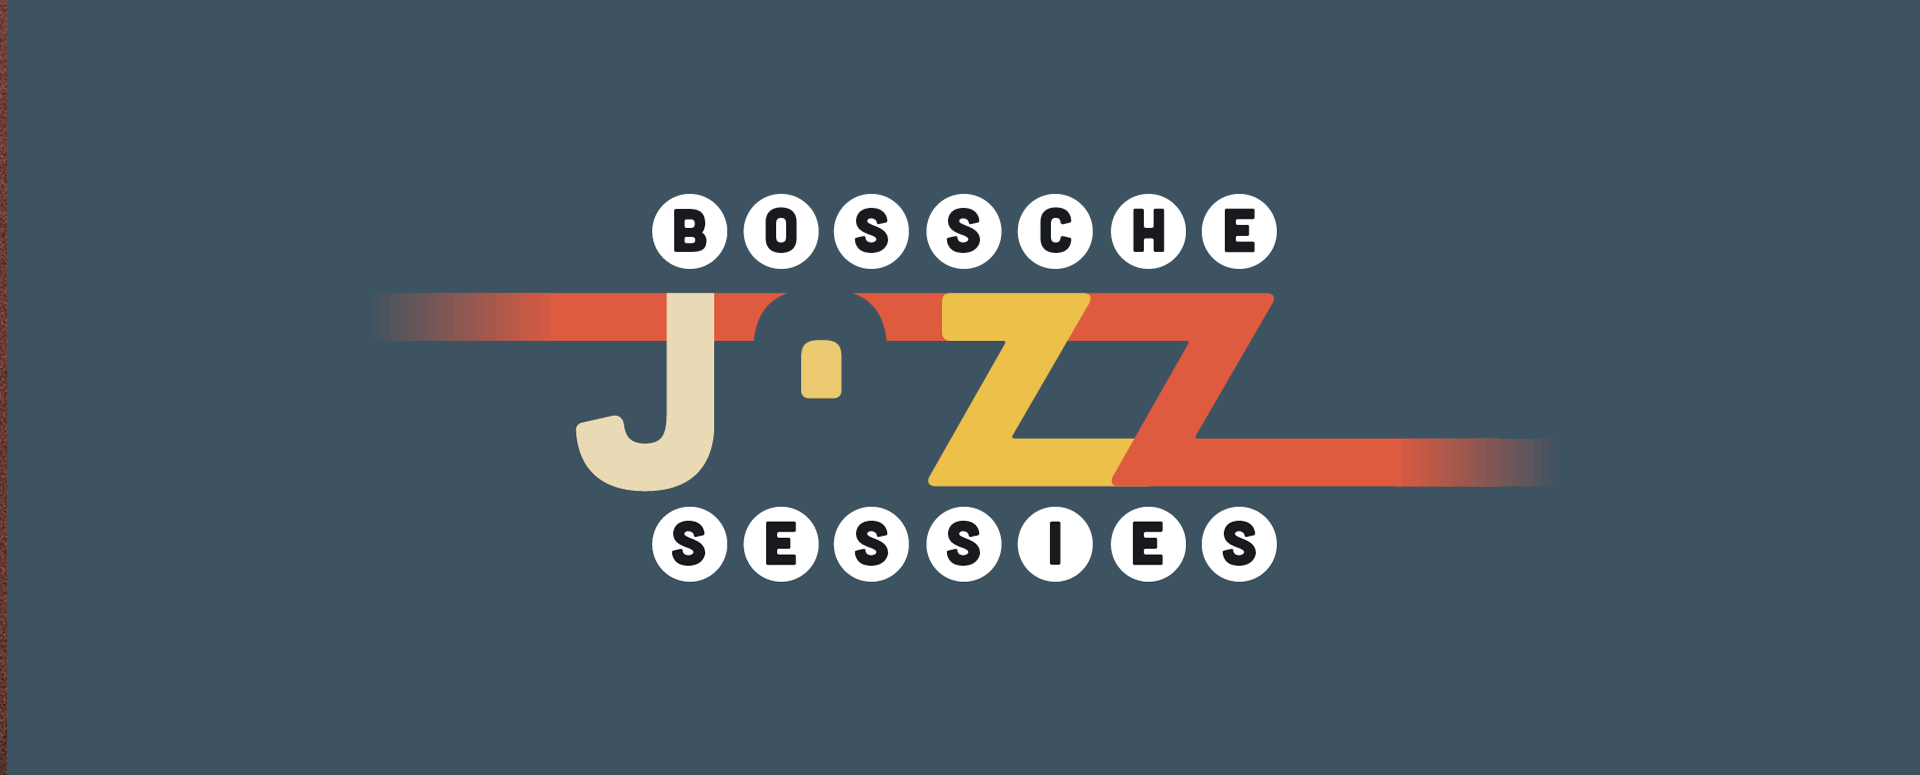 Bossche Jazzsessies22:30 - 23.59 uur